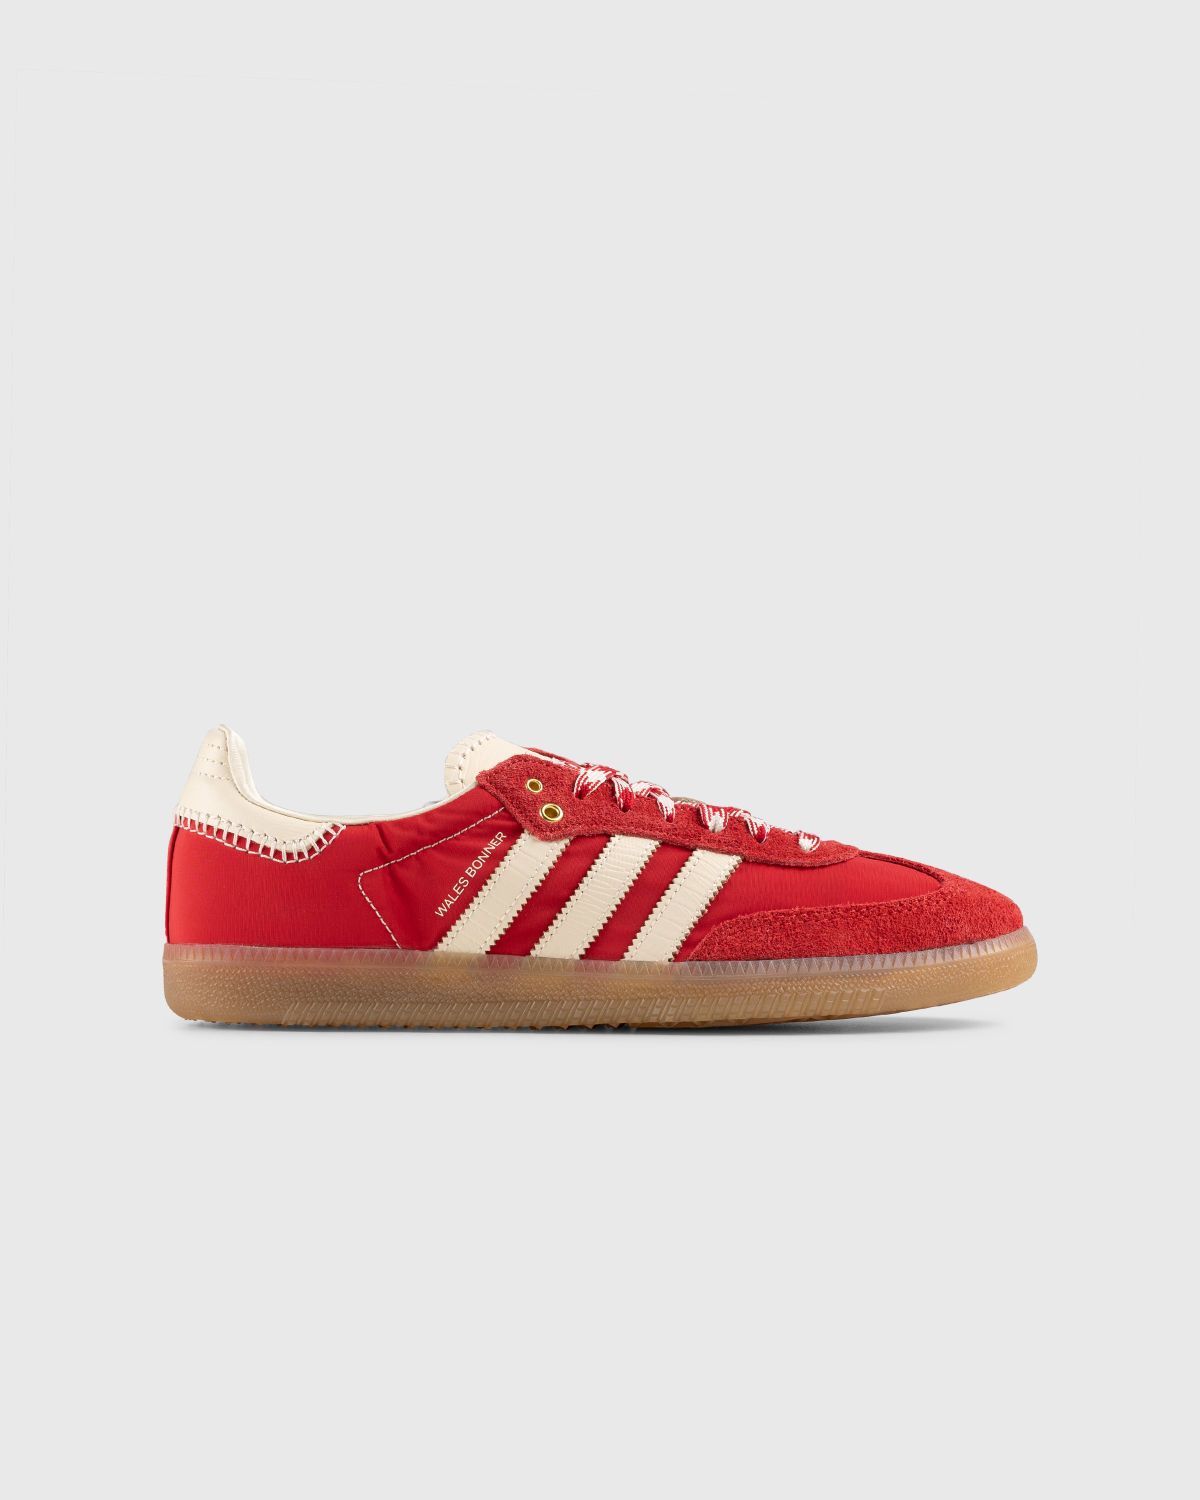 Adidas x Wales Bonner – WB Samba Scarlet/Ecru Tint/Scarlet - Low Top Sneakers - Red - Image 1